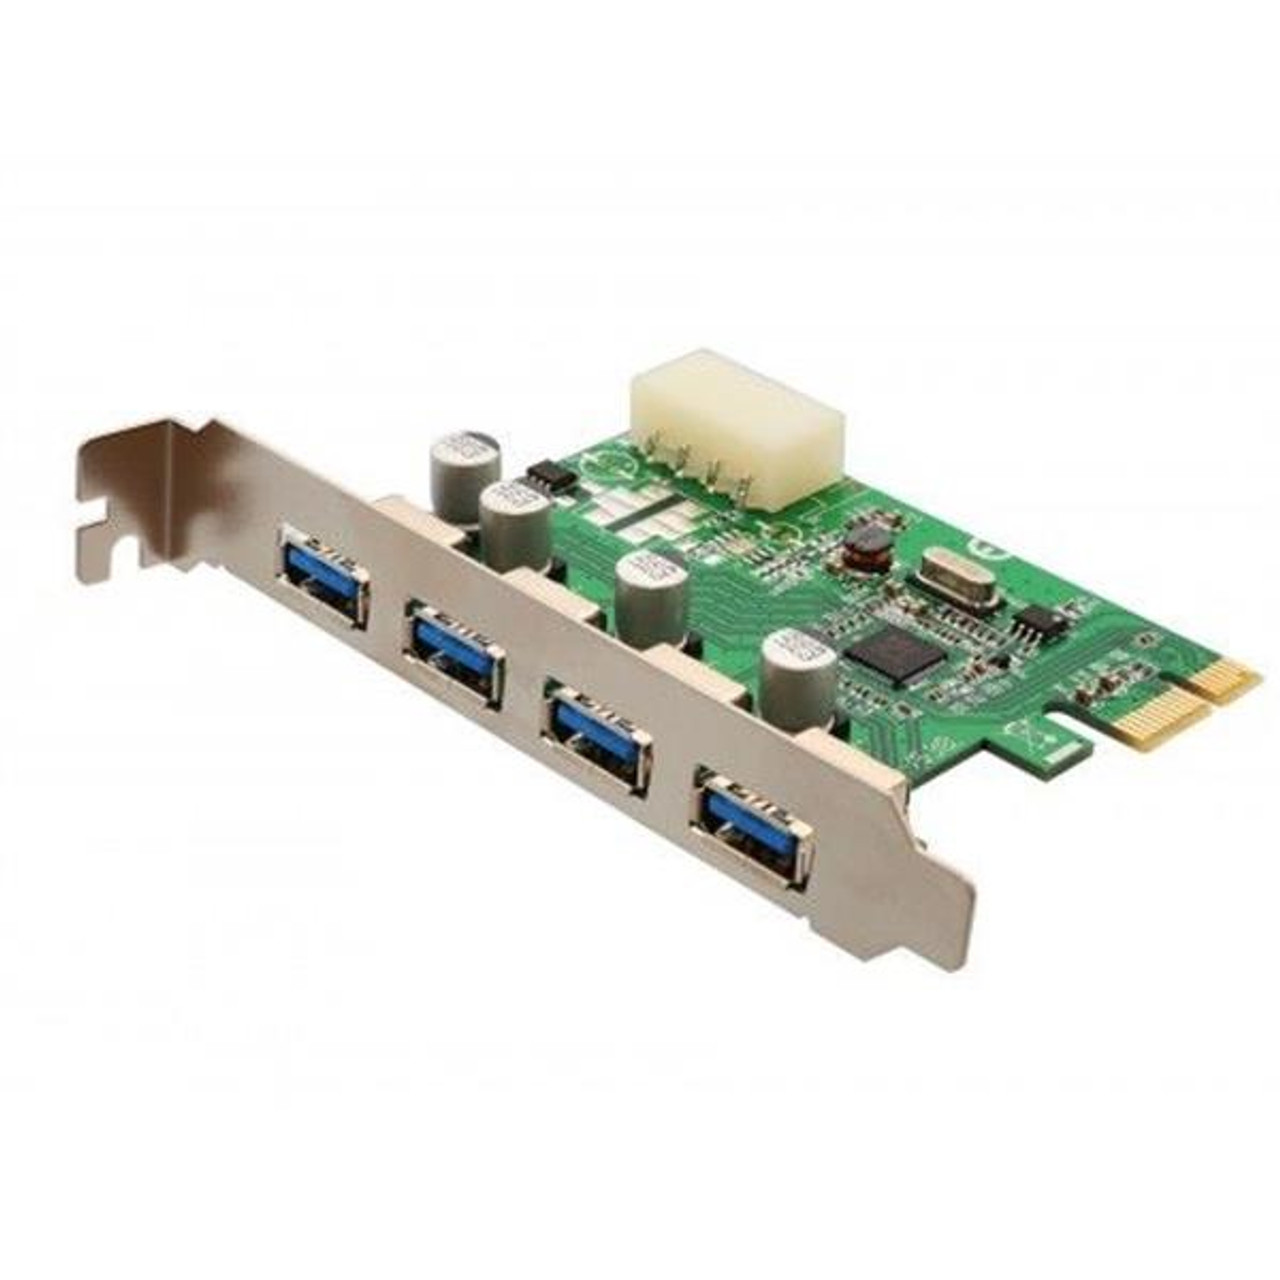 SD-PEX20133 SYBA Multimedia USB 3.0 4-port PCI-e Controller Card PCI Express 2.0 x1 Plug-in Card 4 USB Port(s)